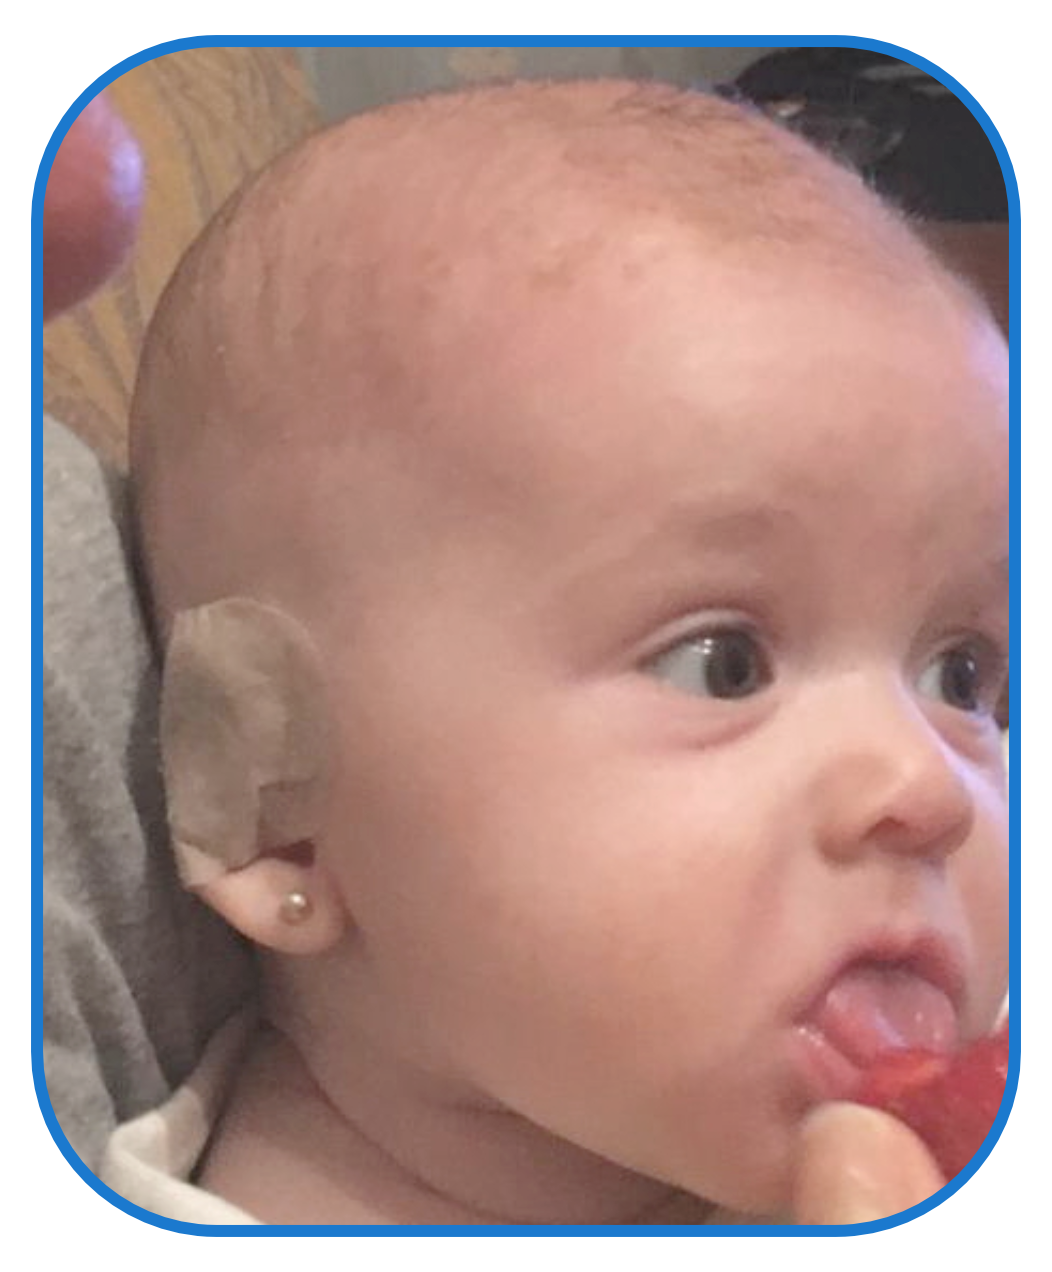 baby's ear splint treatment with ear buddies